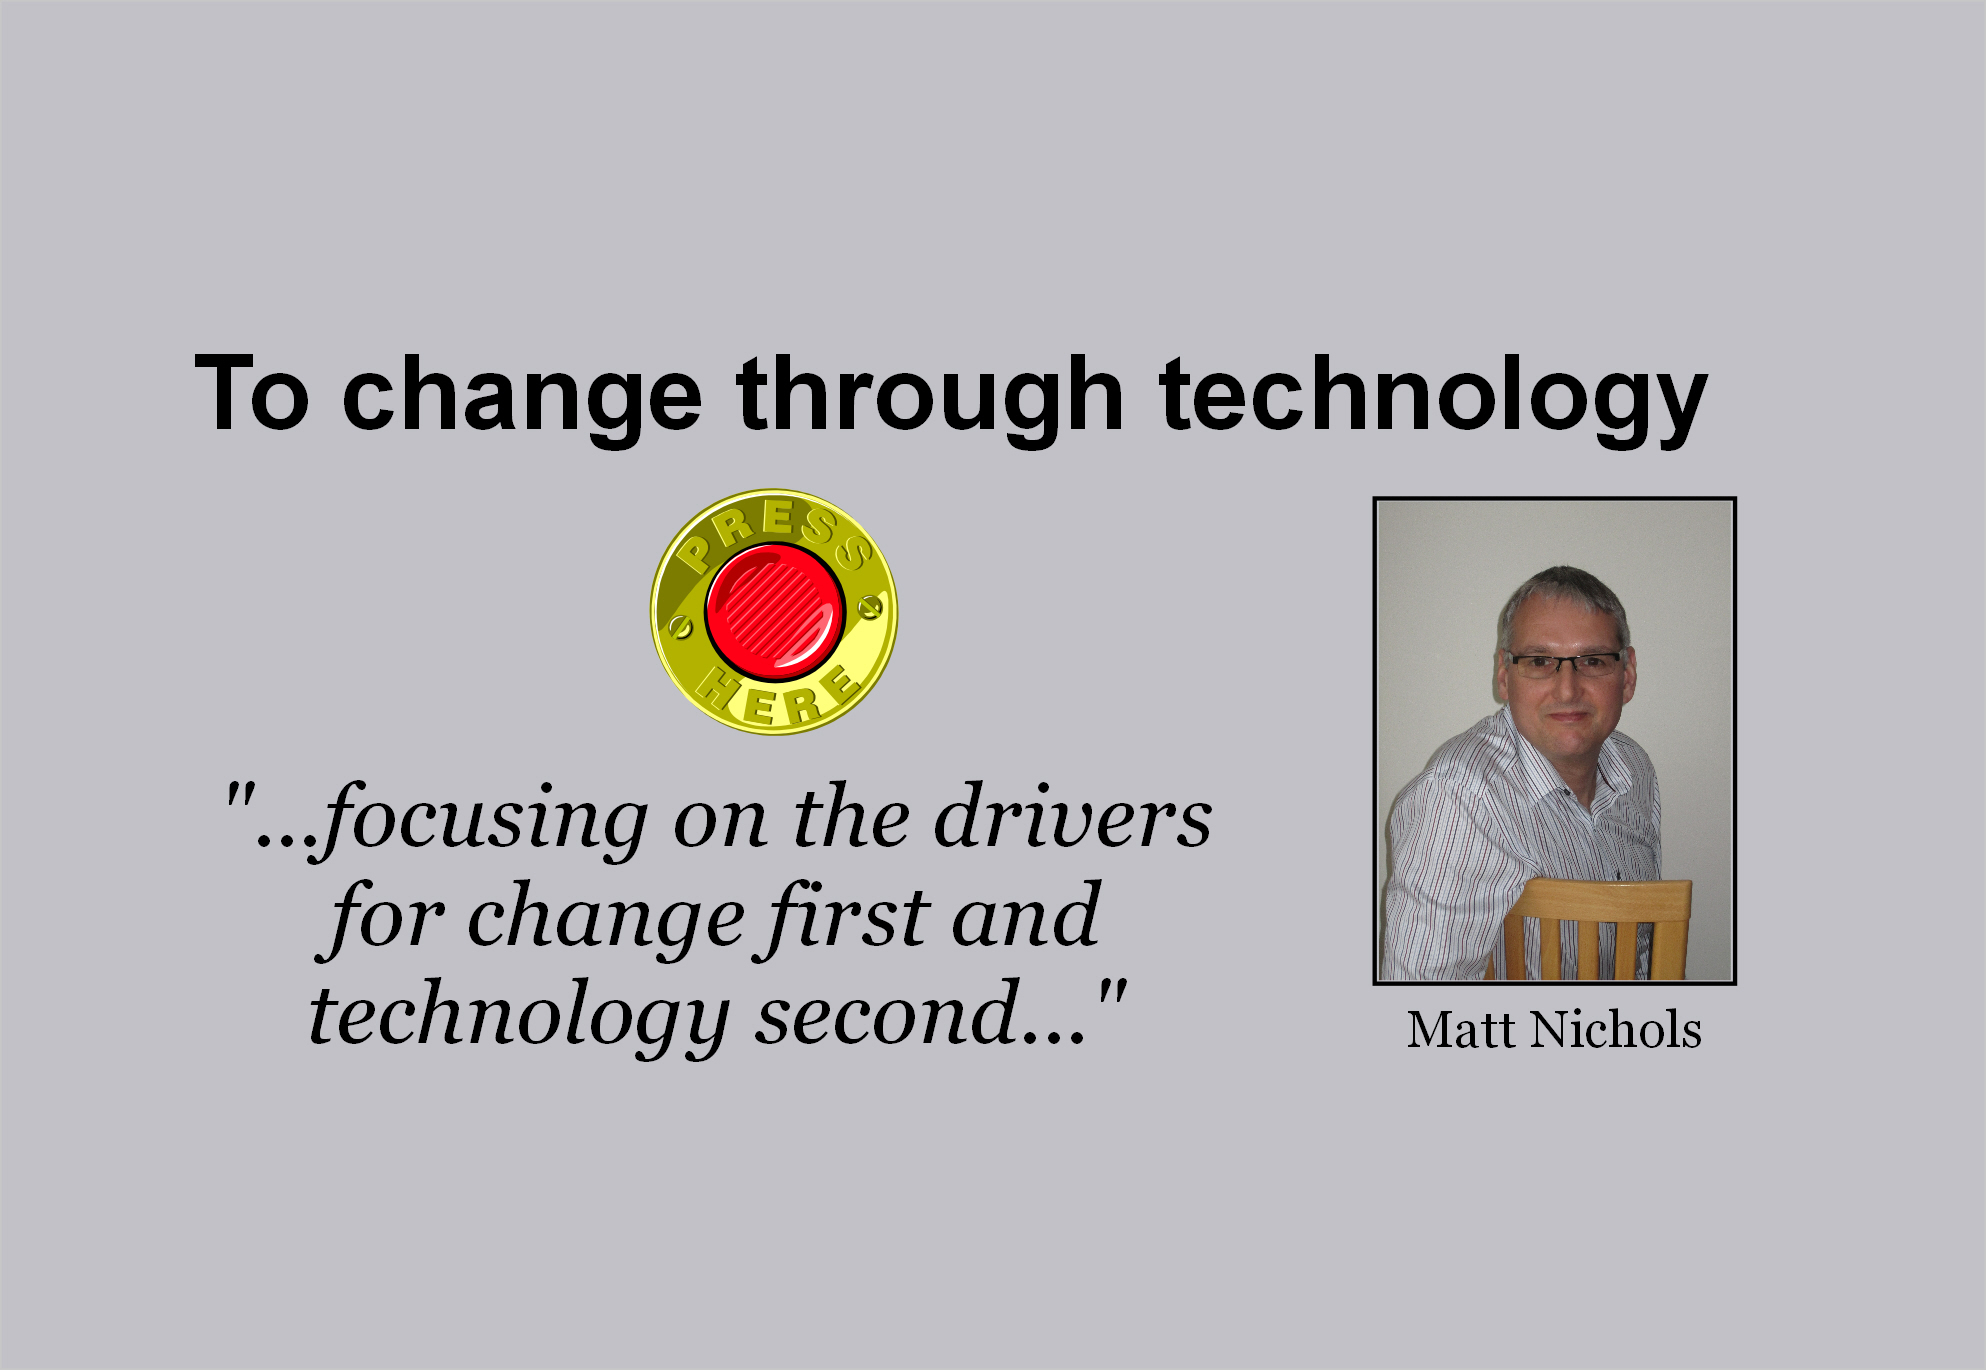 Change through technology 5